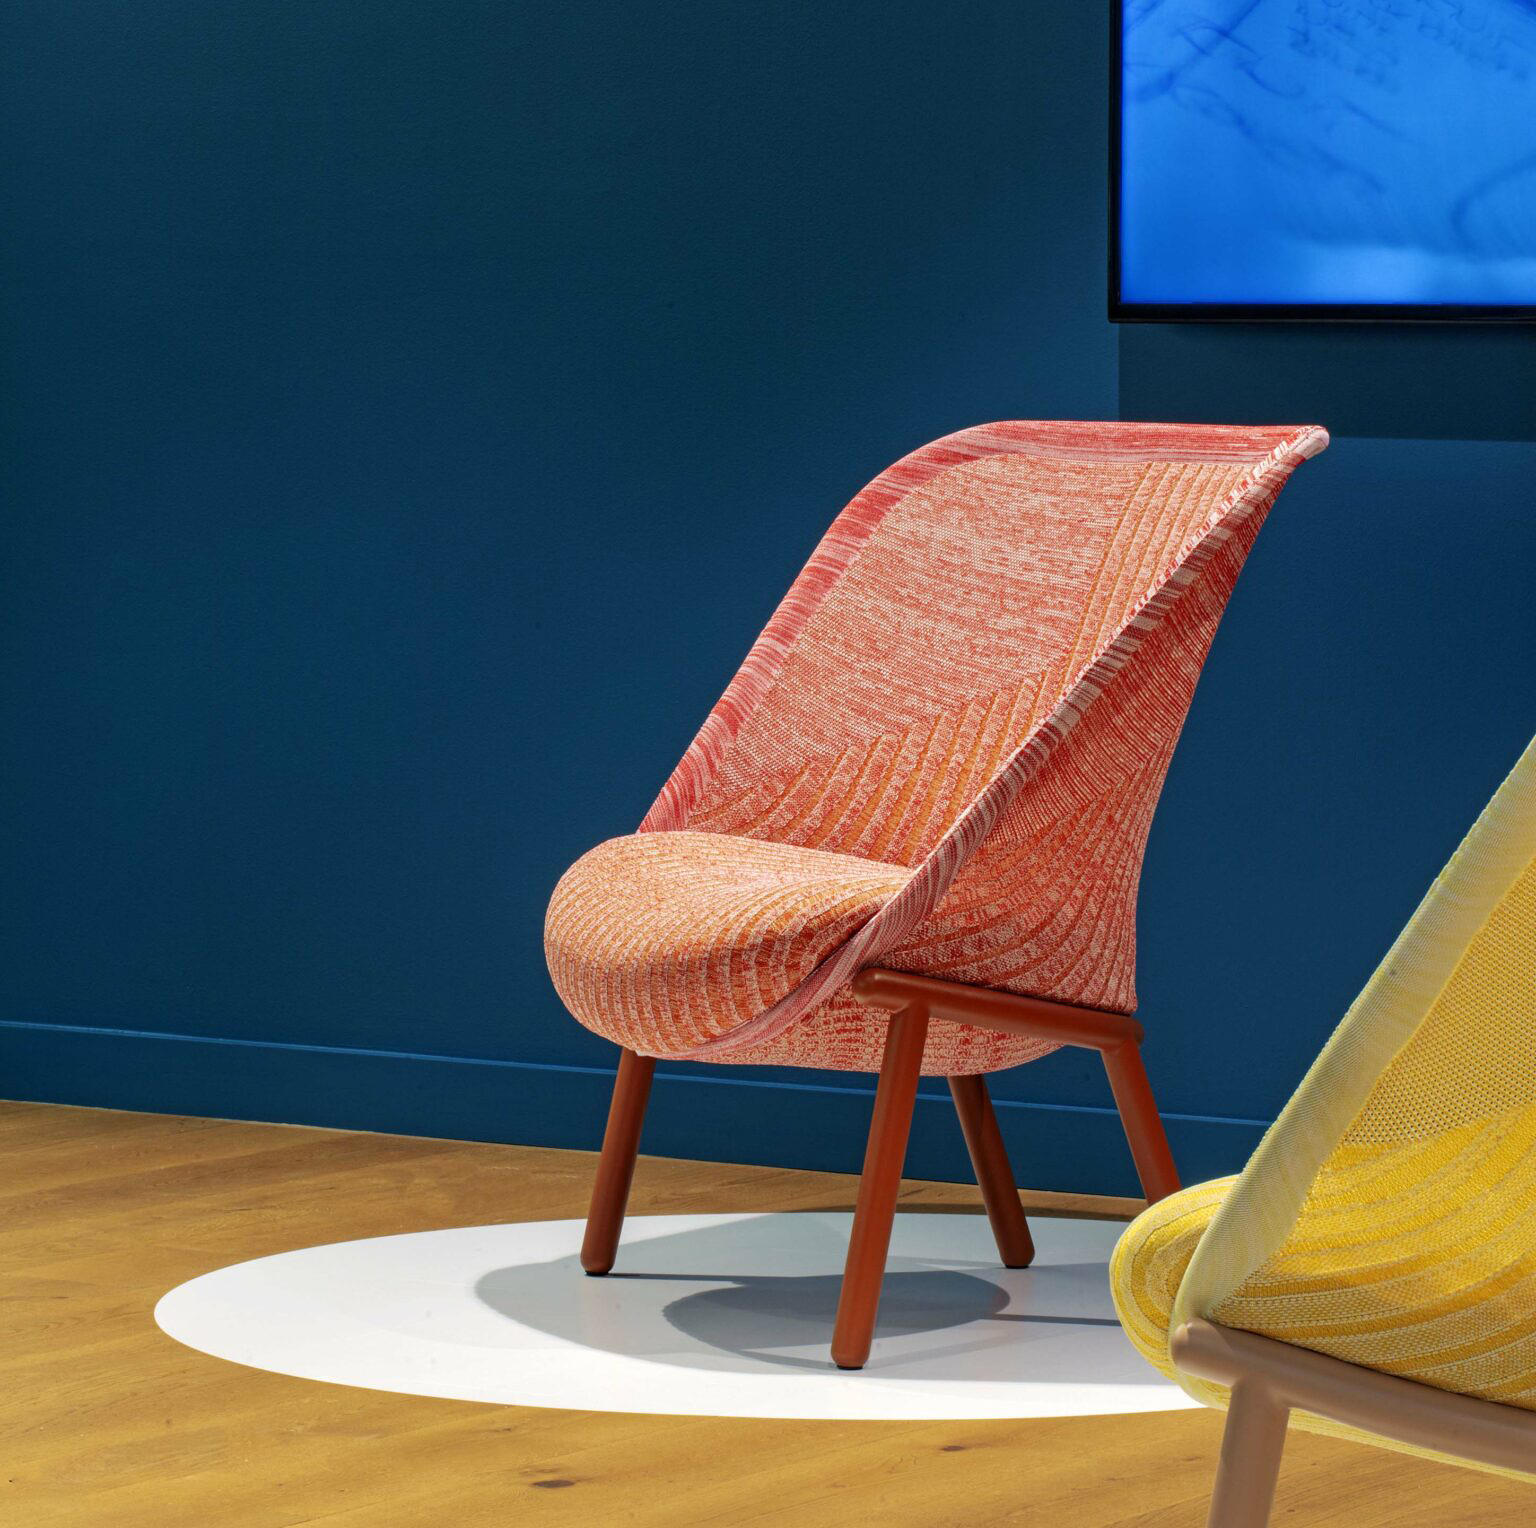 Cardigan Lounge Chair by Patricia Urquiola for Haworth